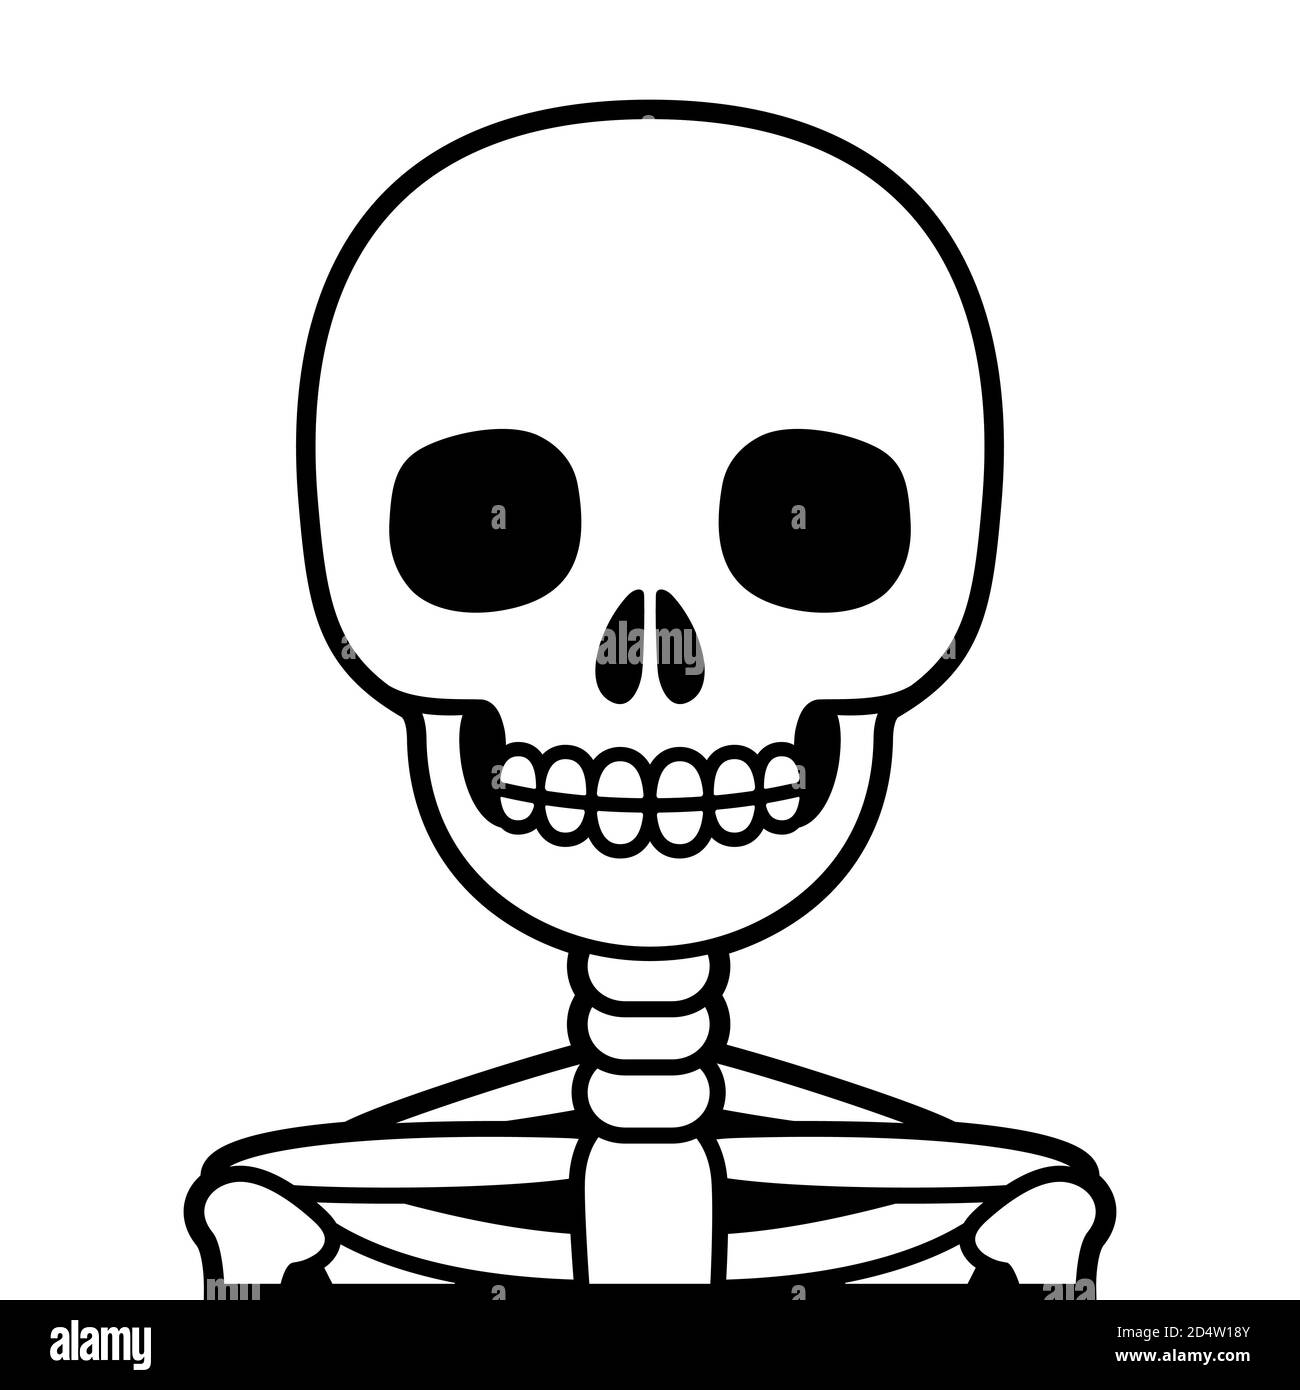 Share 139+ skeleton sketch easy best